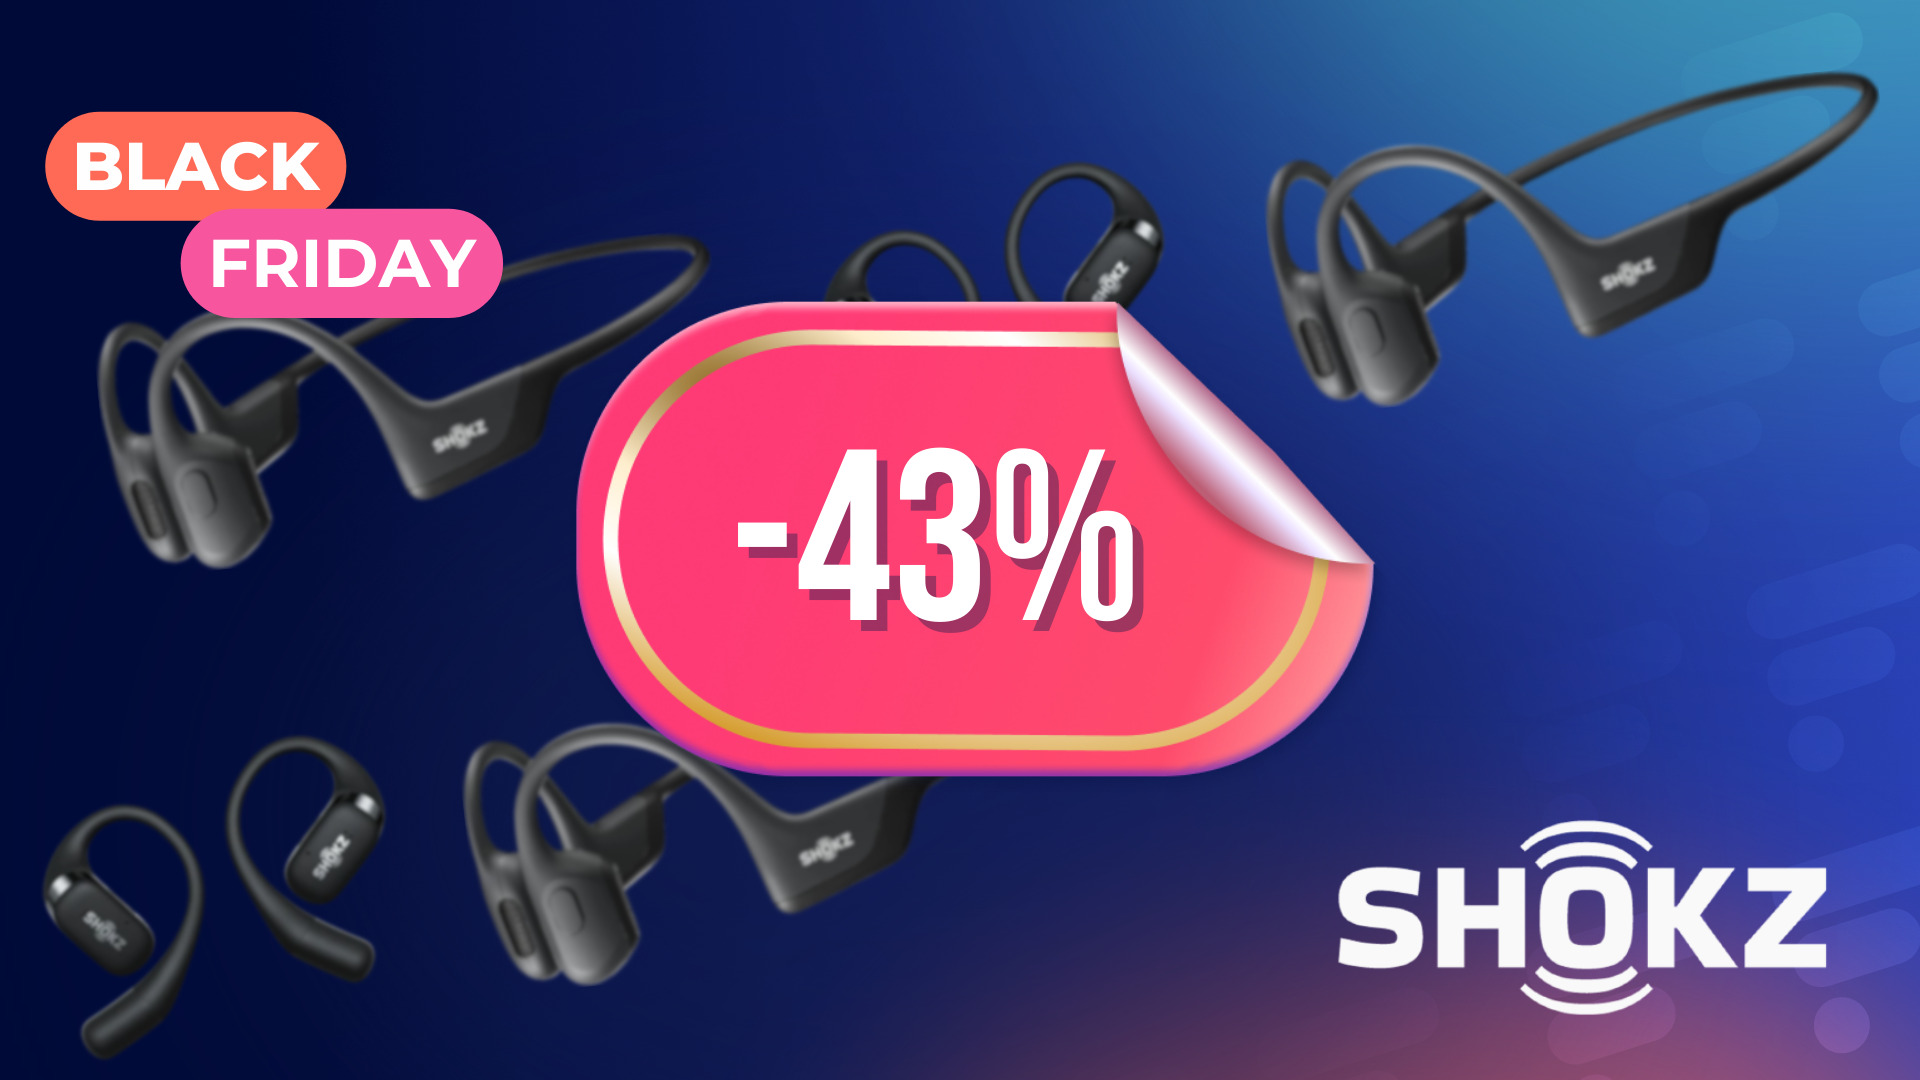 Shokz headphones drop in price for Black Friday Archyde